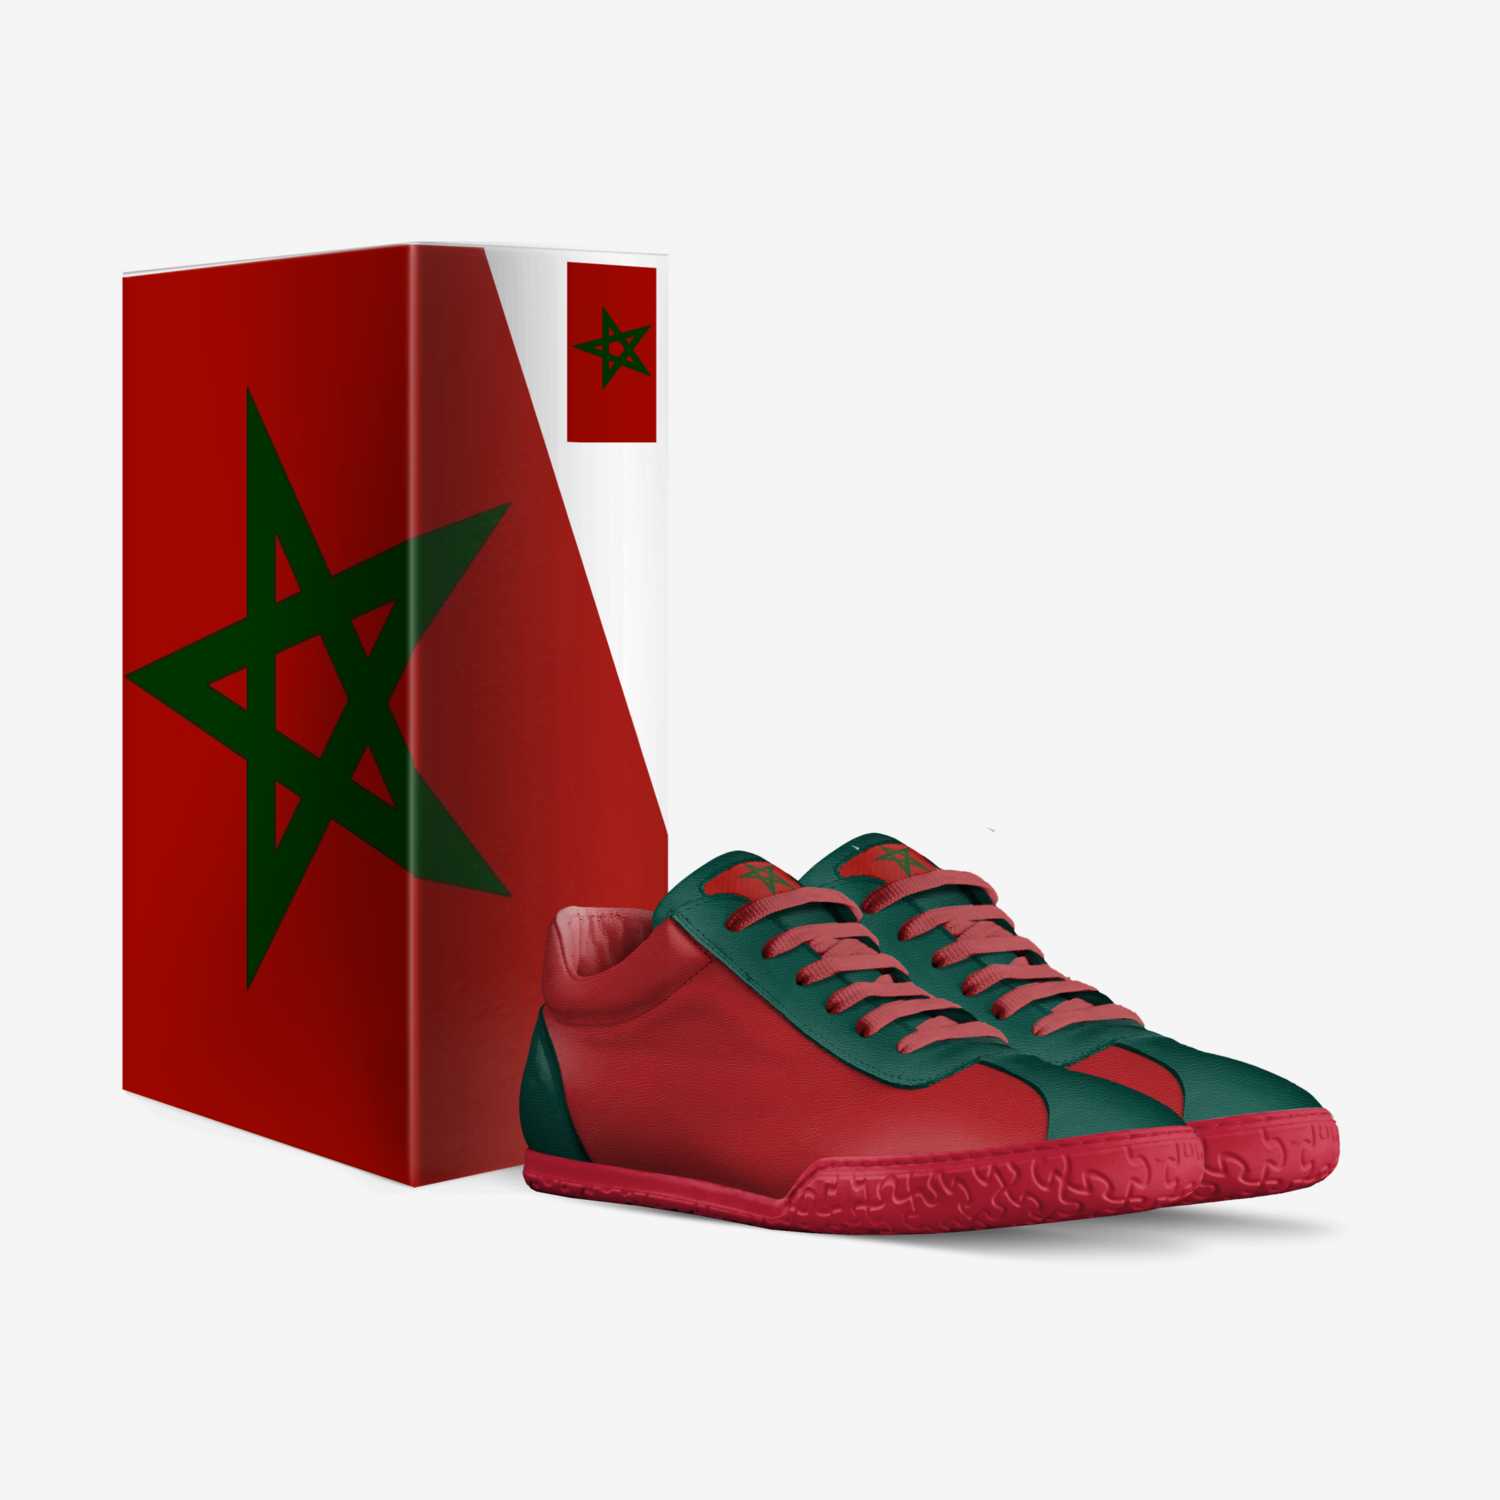 Mauramani Geeche custom made in Italy shoes by Amaanah Taqwaamani | Box view